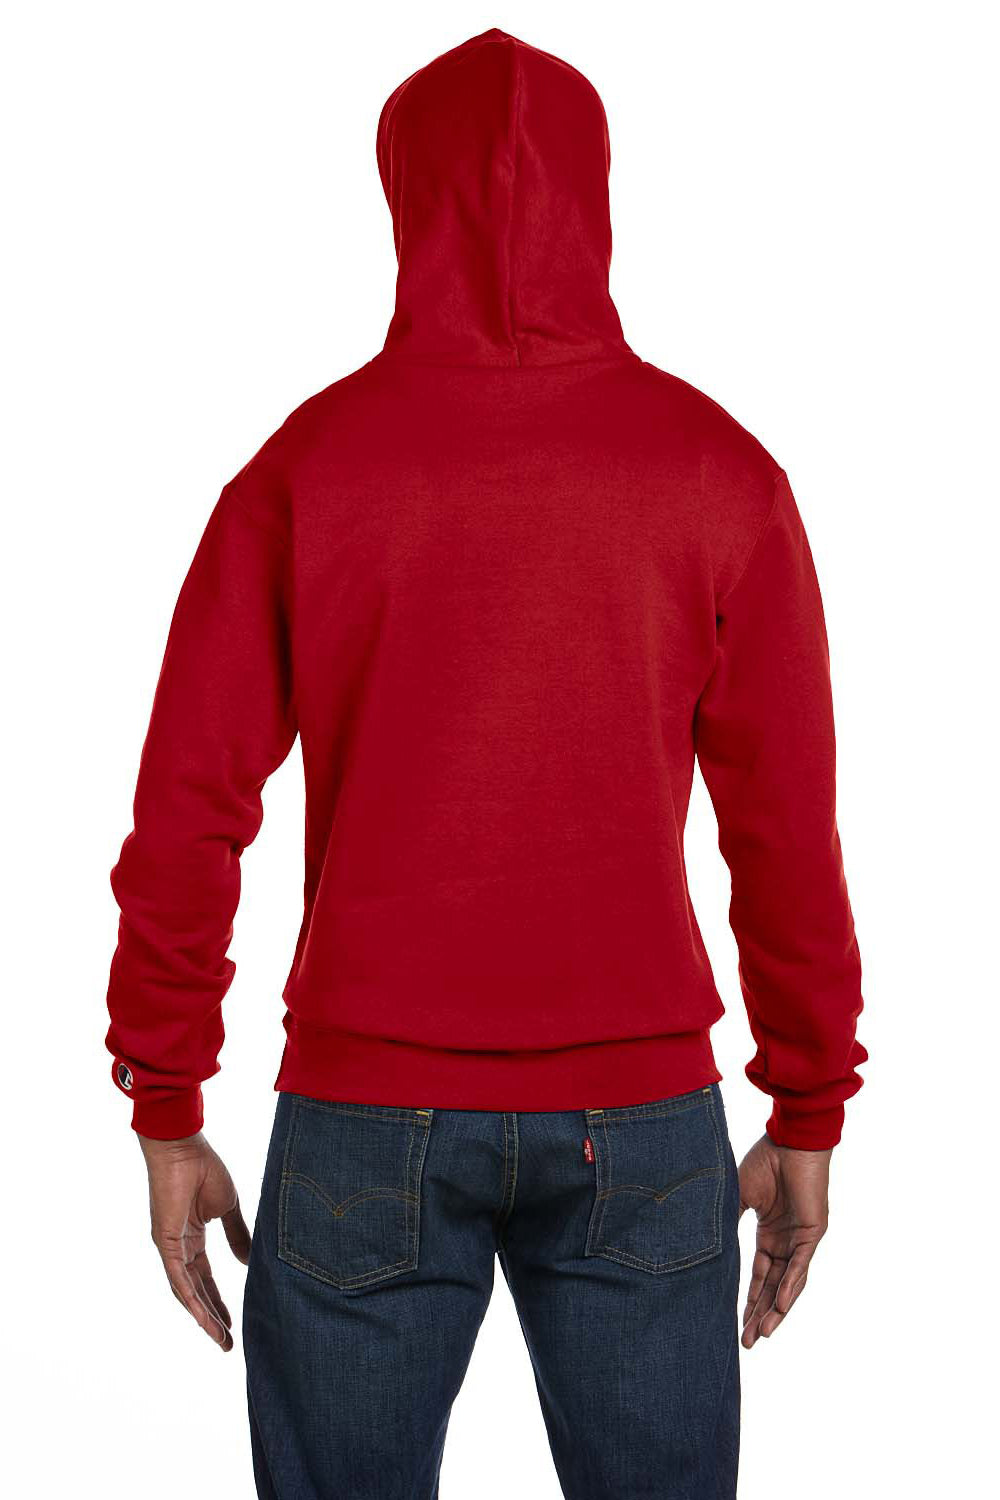 Champion S700 Mens Double Dry Eco Moisture Wicking Fleece Hooded Sweatshirt Hoodie Red Back